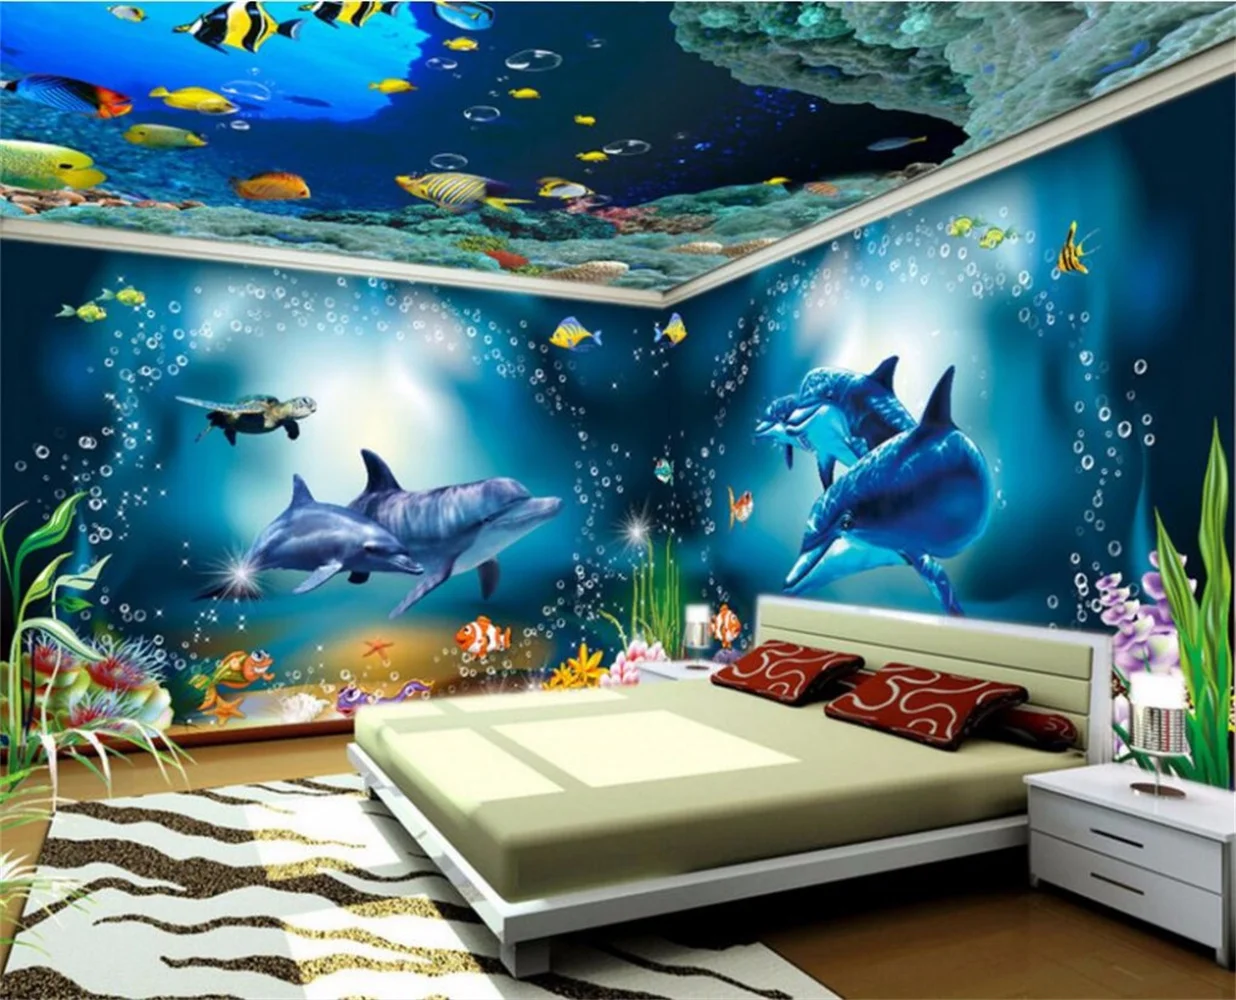 

beibehang Custom photo 3d wallpaper mural Dolphin underwater world abstract living room background wall papel de parede murals